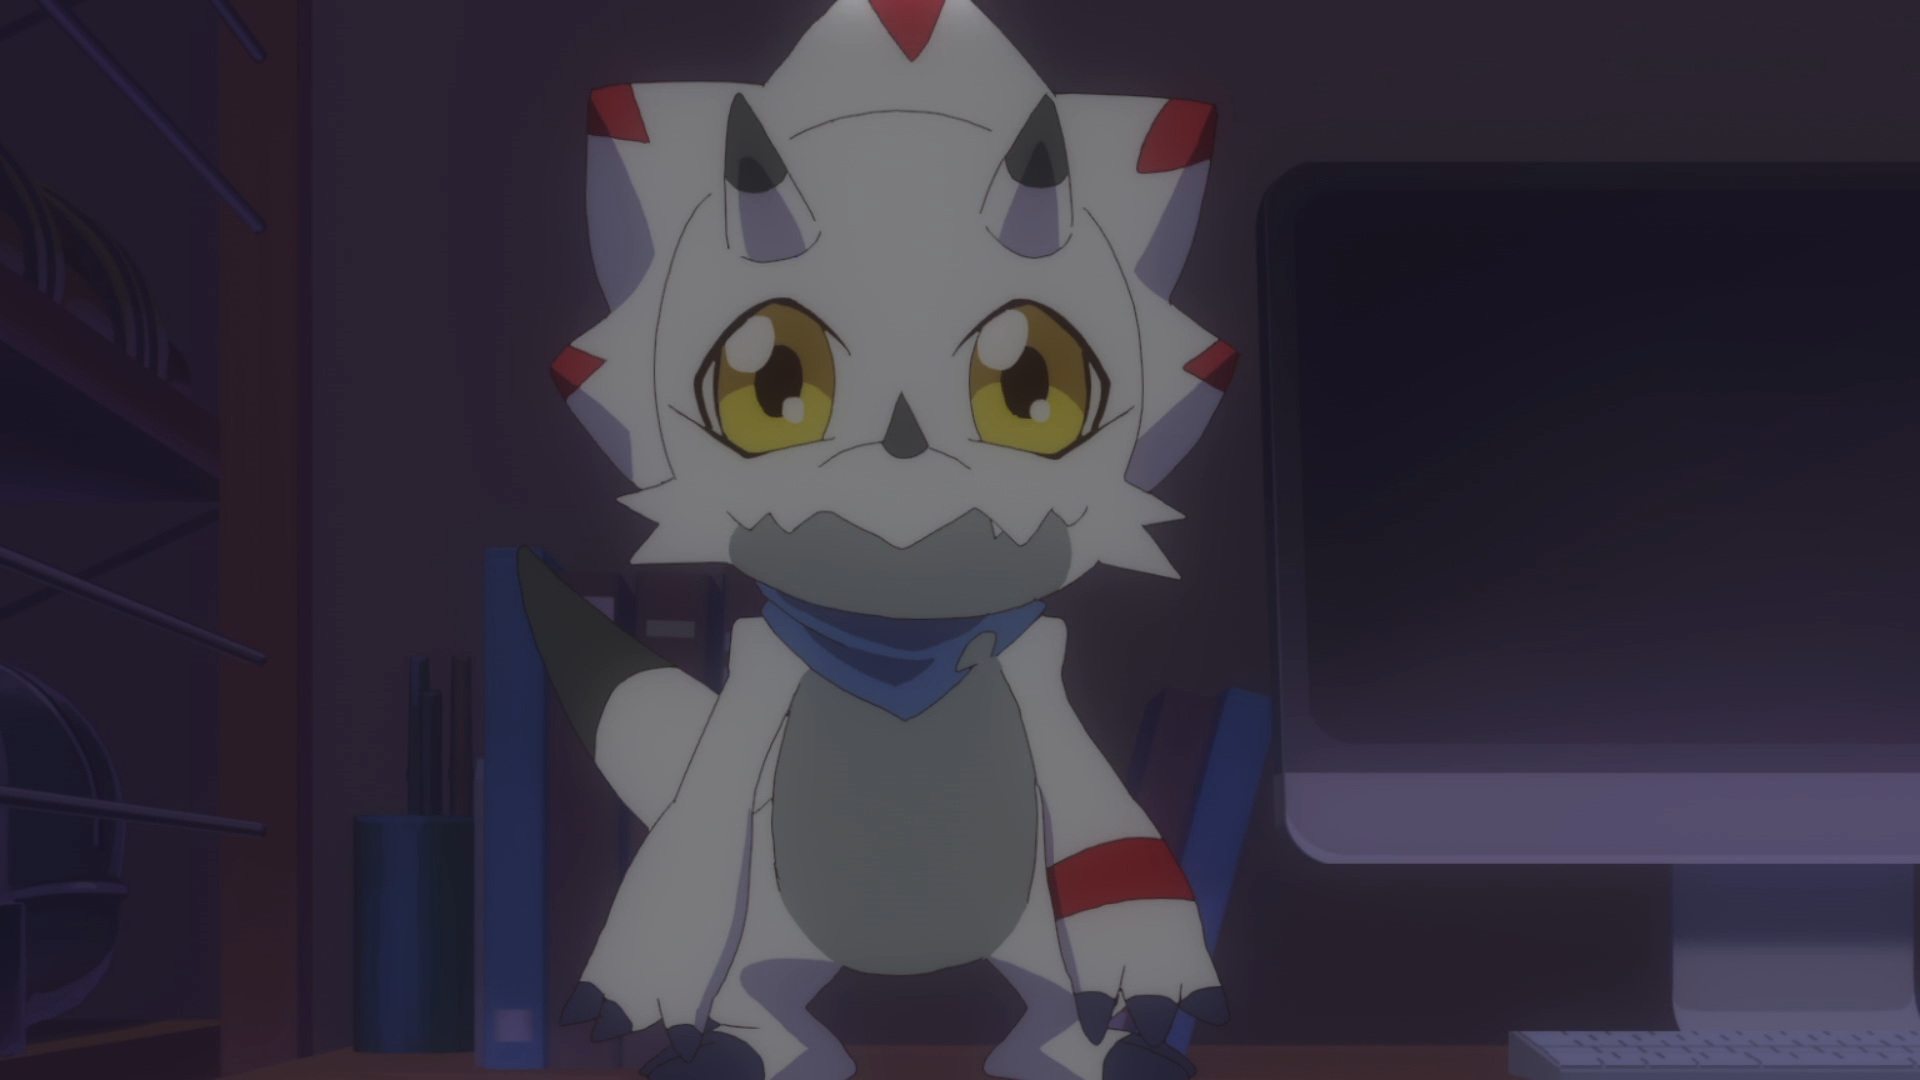 Digimon Ghost Game - Episódio 36 - Animes Online